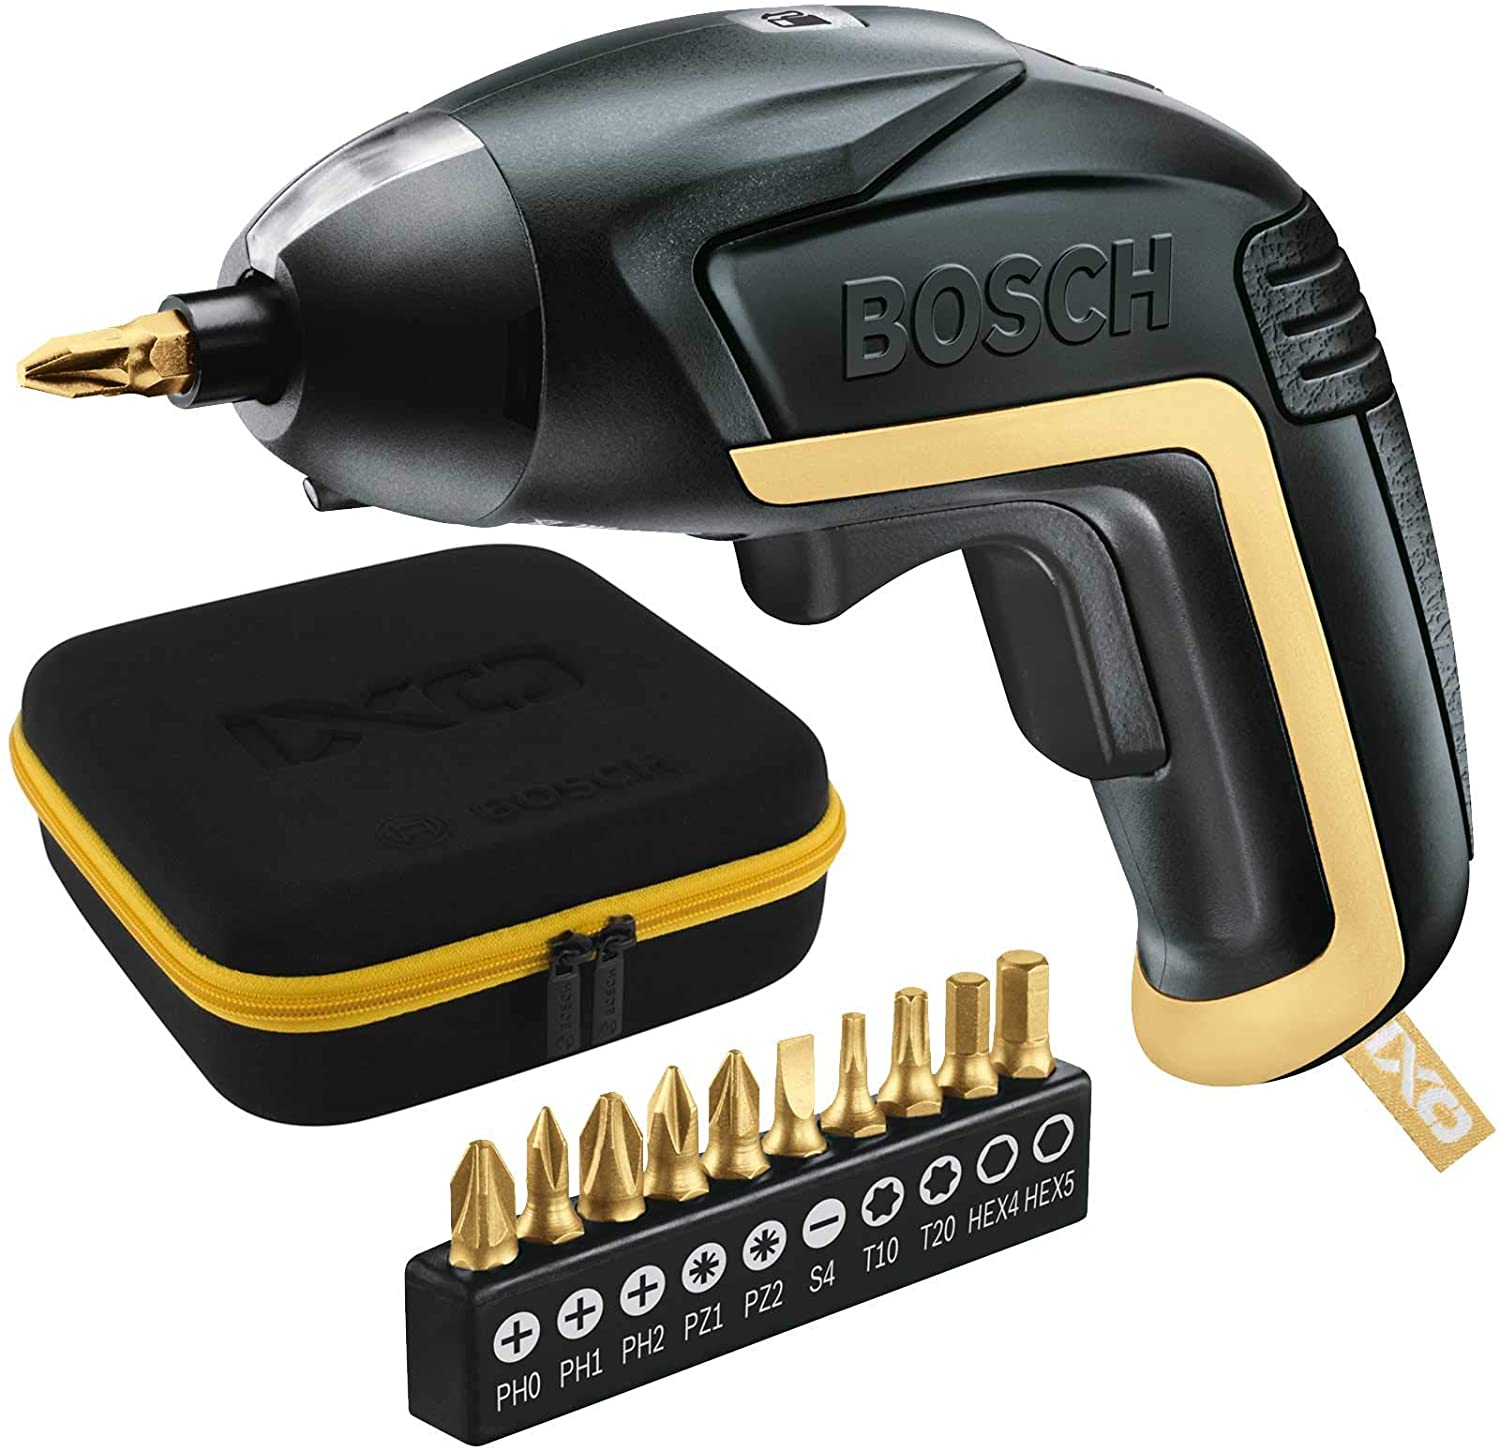 Bosch IXO 3.6 V GOLD Cordless Screw Driver Special Edition - Advanced Solutions Tools II حلول متقدمة للعدد